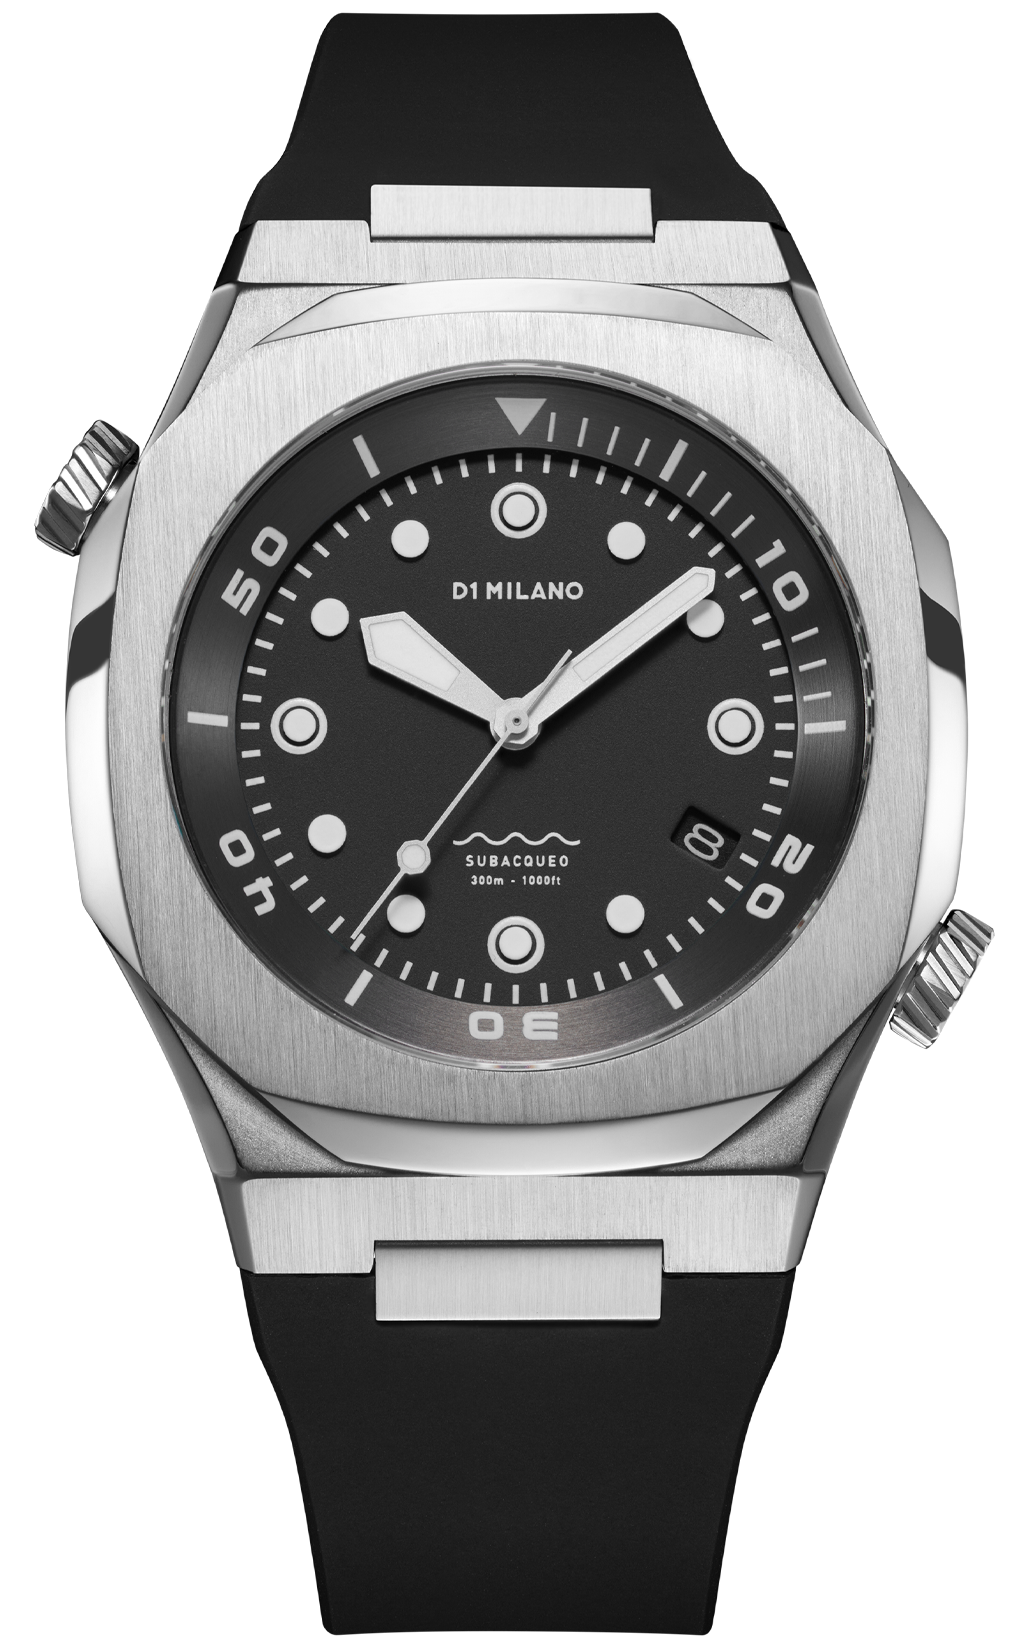 Photos - Wrist Watch Milano D1  Watch Subacqueo Diver Deep Black DLM-063 